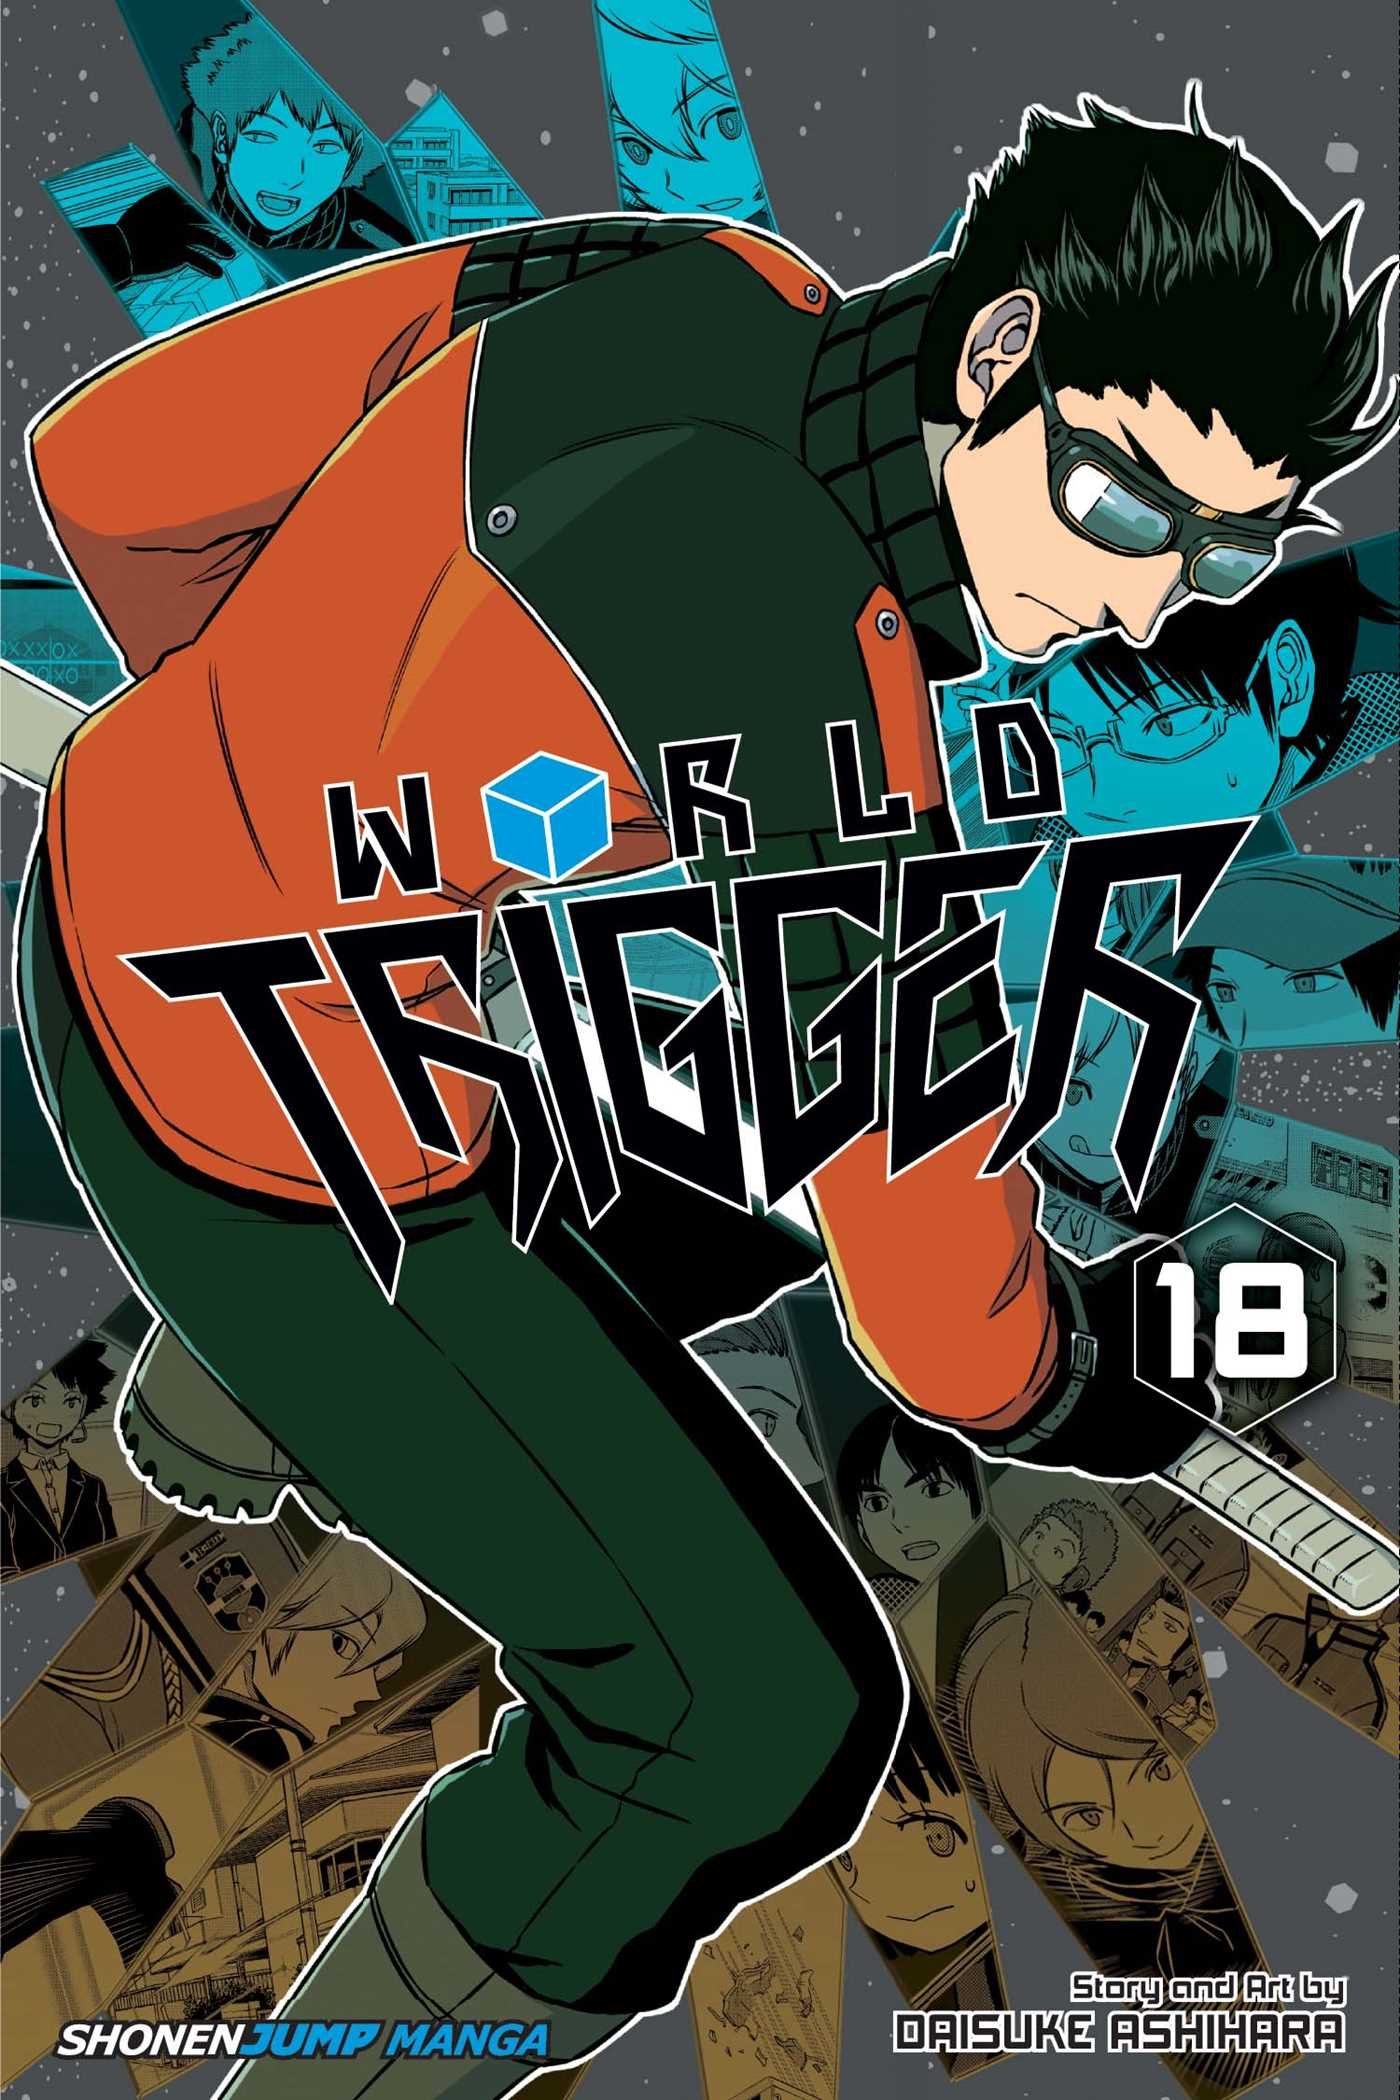 World Trigger - Volume 18 | Daisuke Ashihara